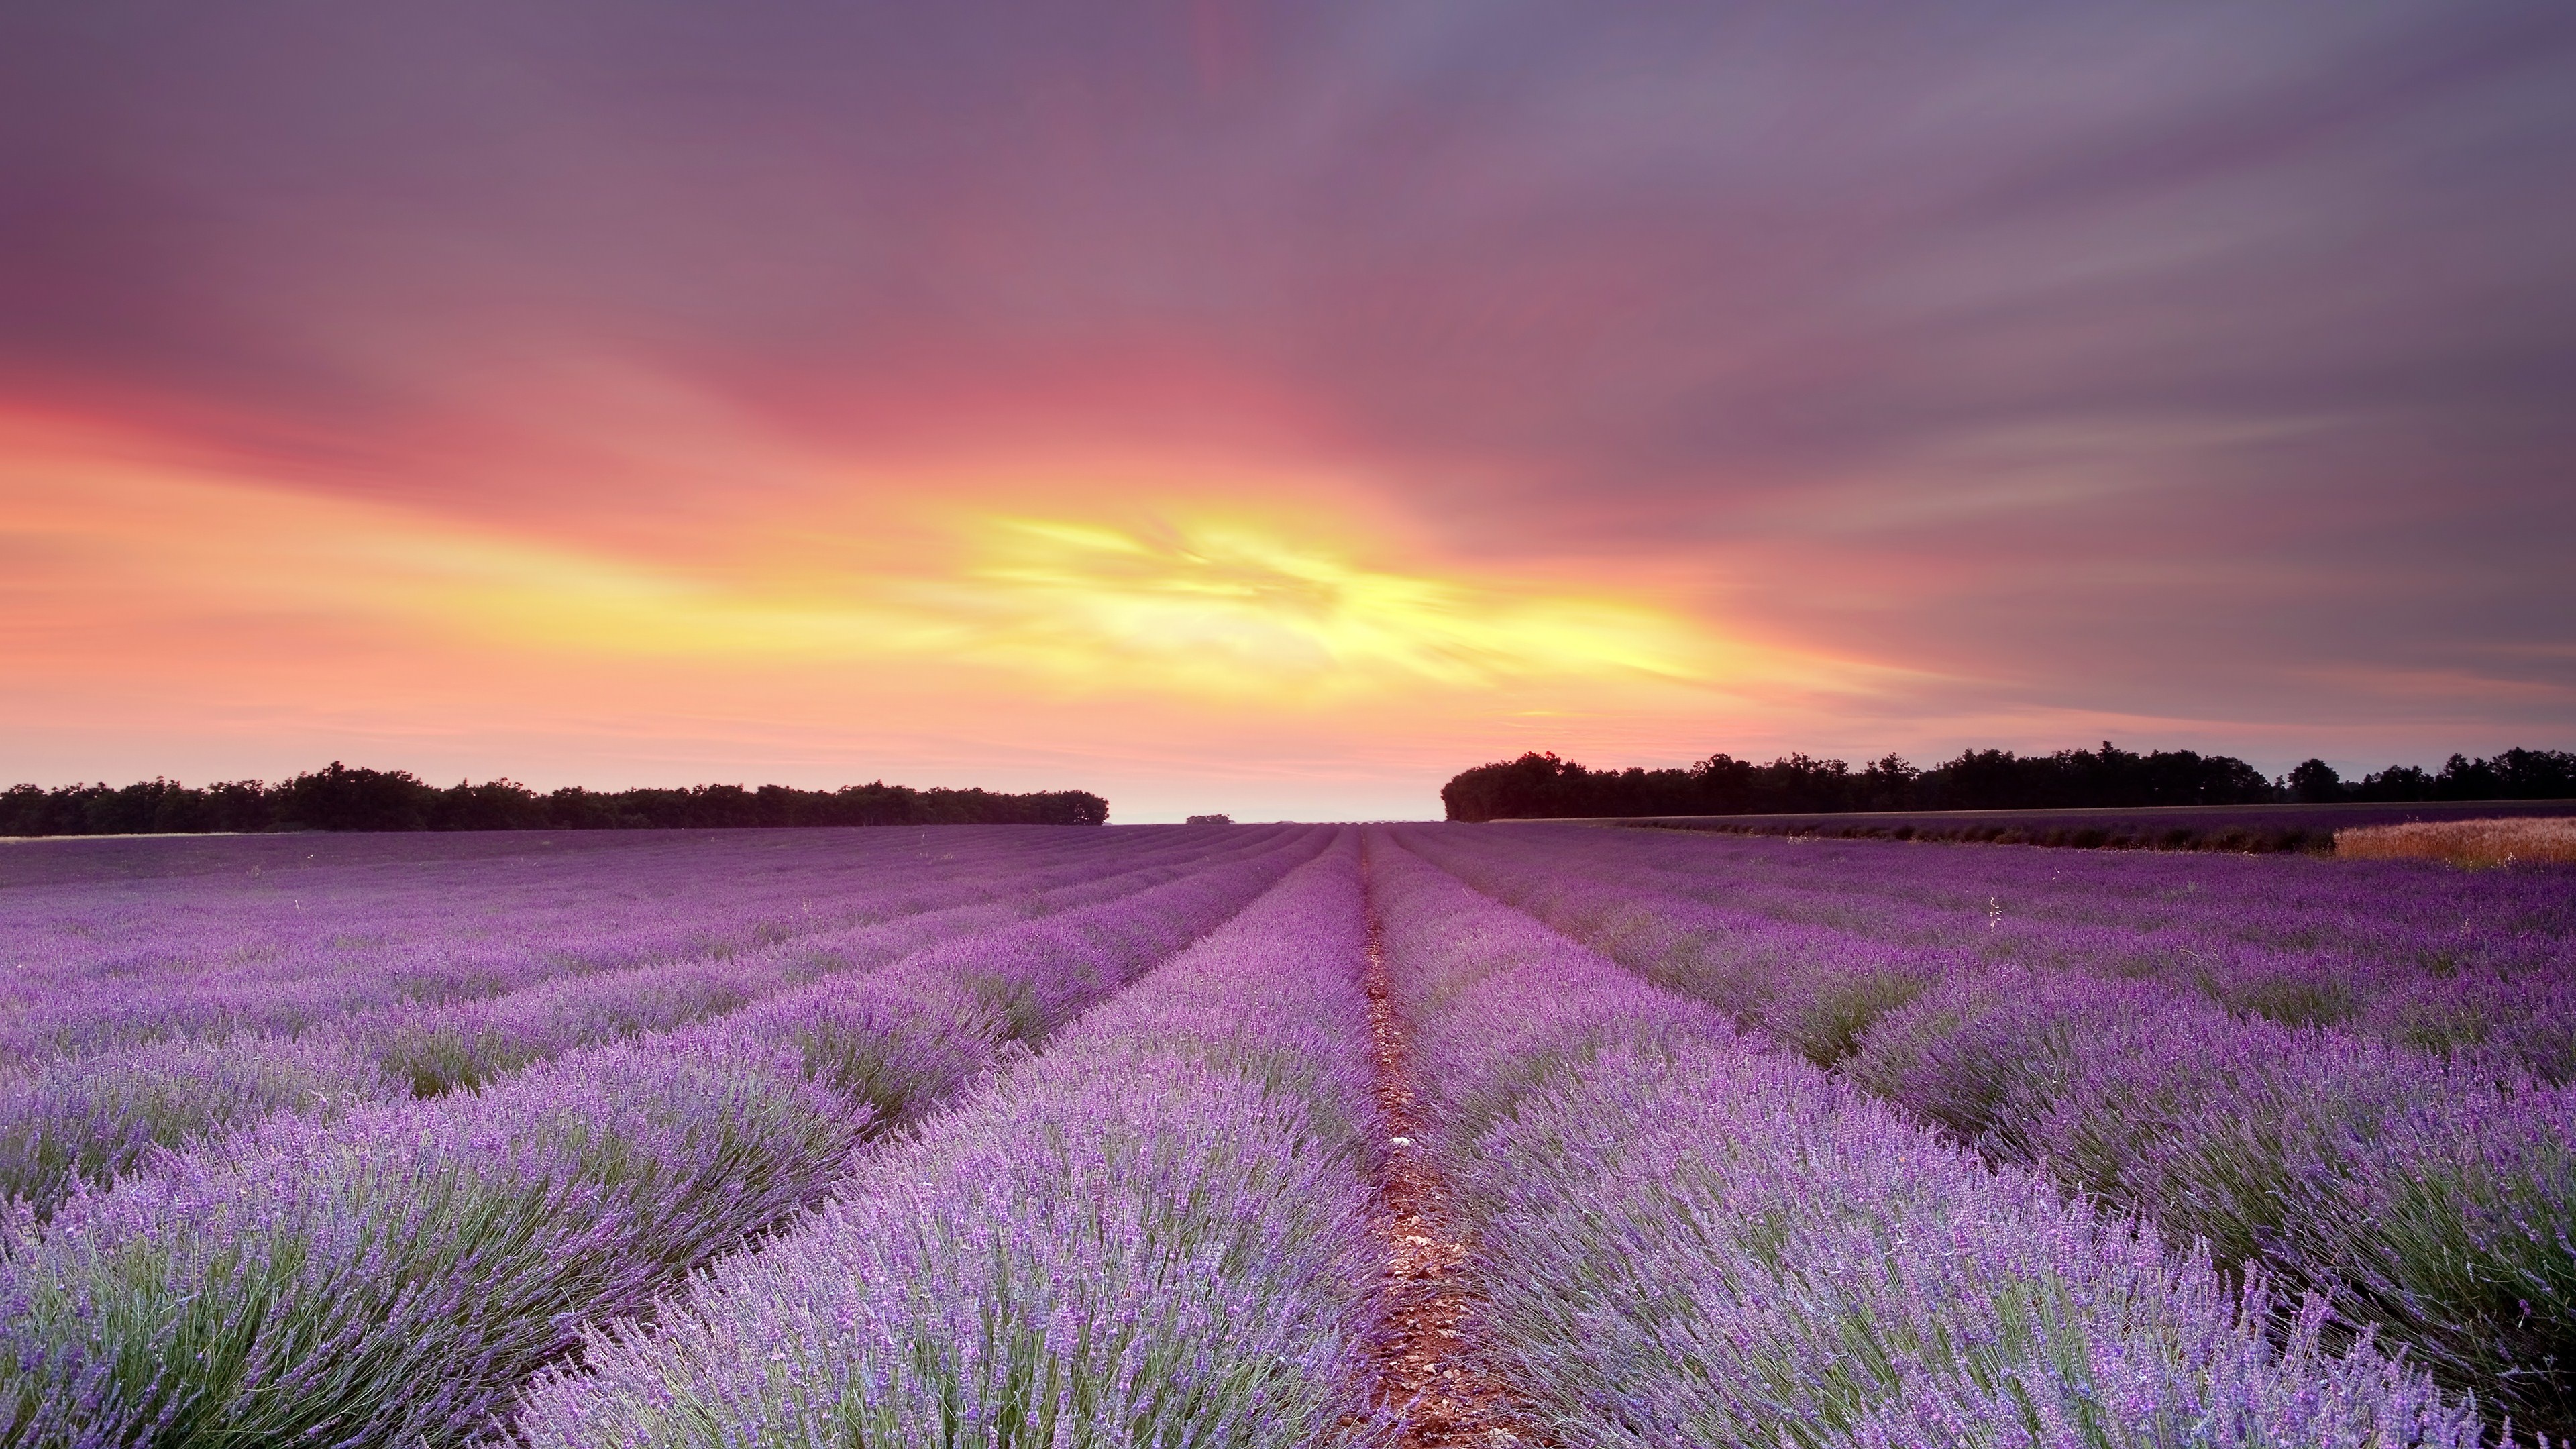 Lavender 4K Ultra HD, Wallpaper background image, Lavender bliss, Nature's beauty, 3840x2160 4K Desktop